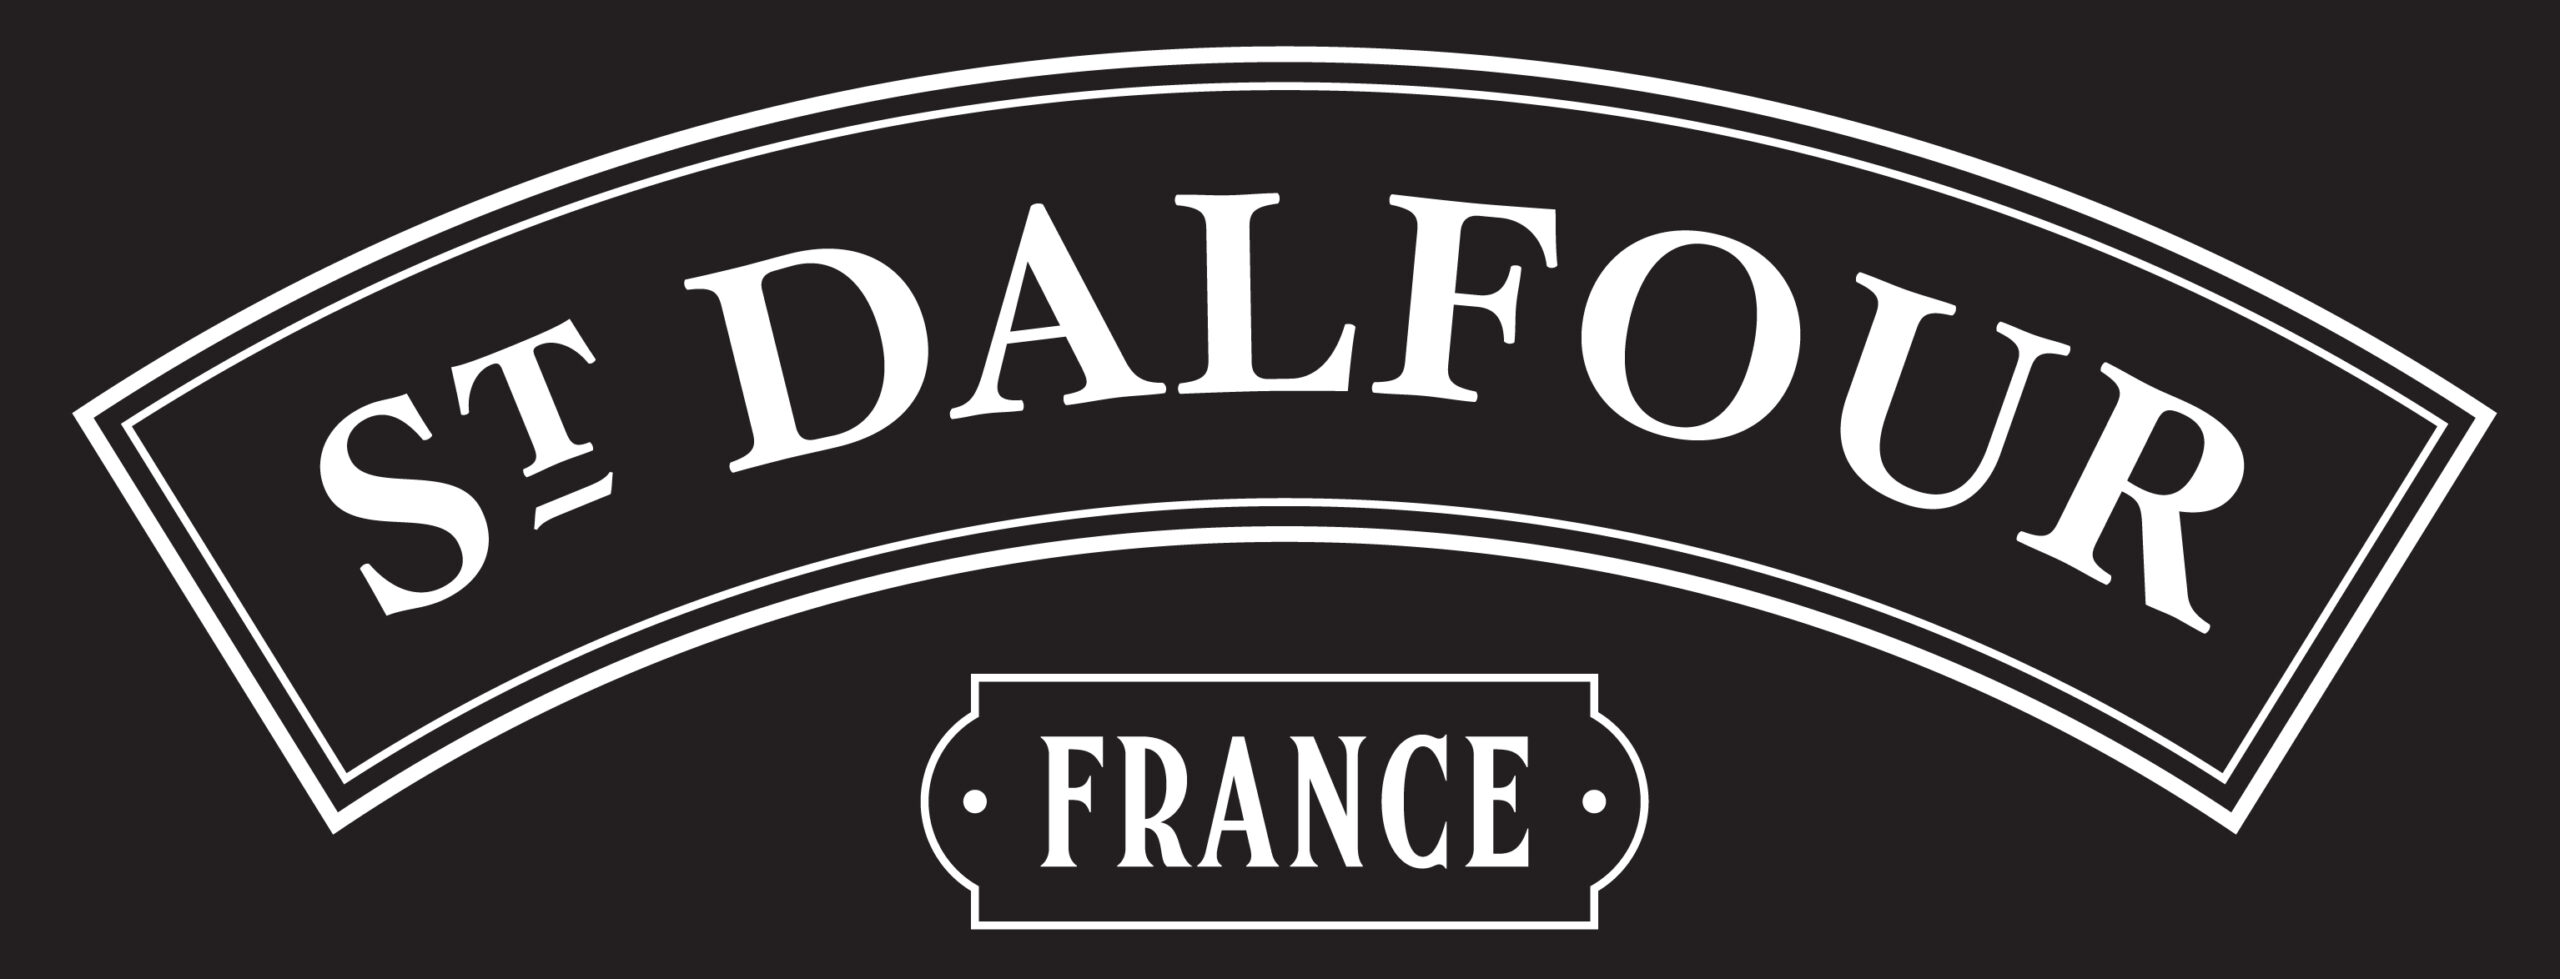 St.Dalfour_logo-scaled.jpg